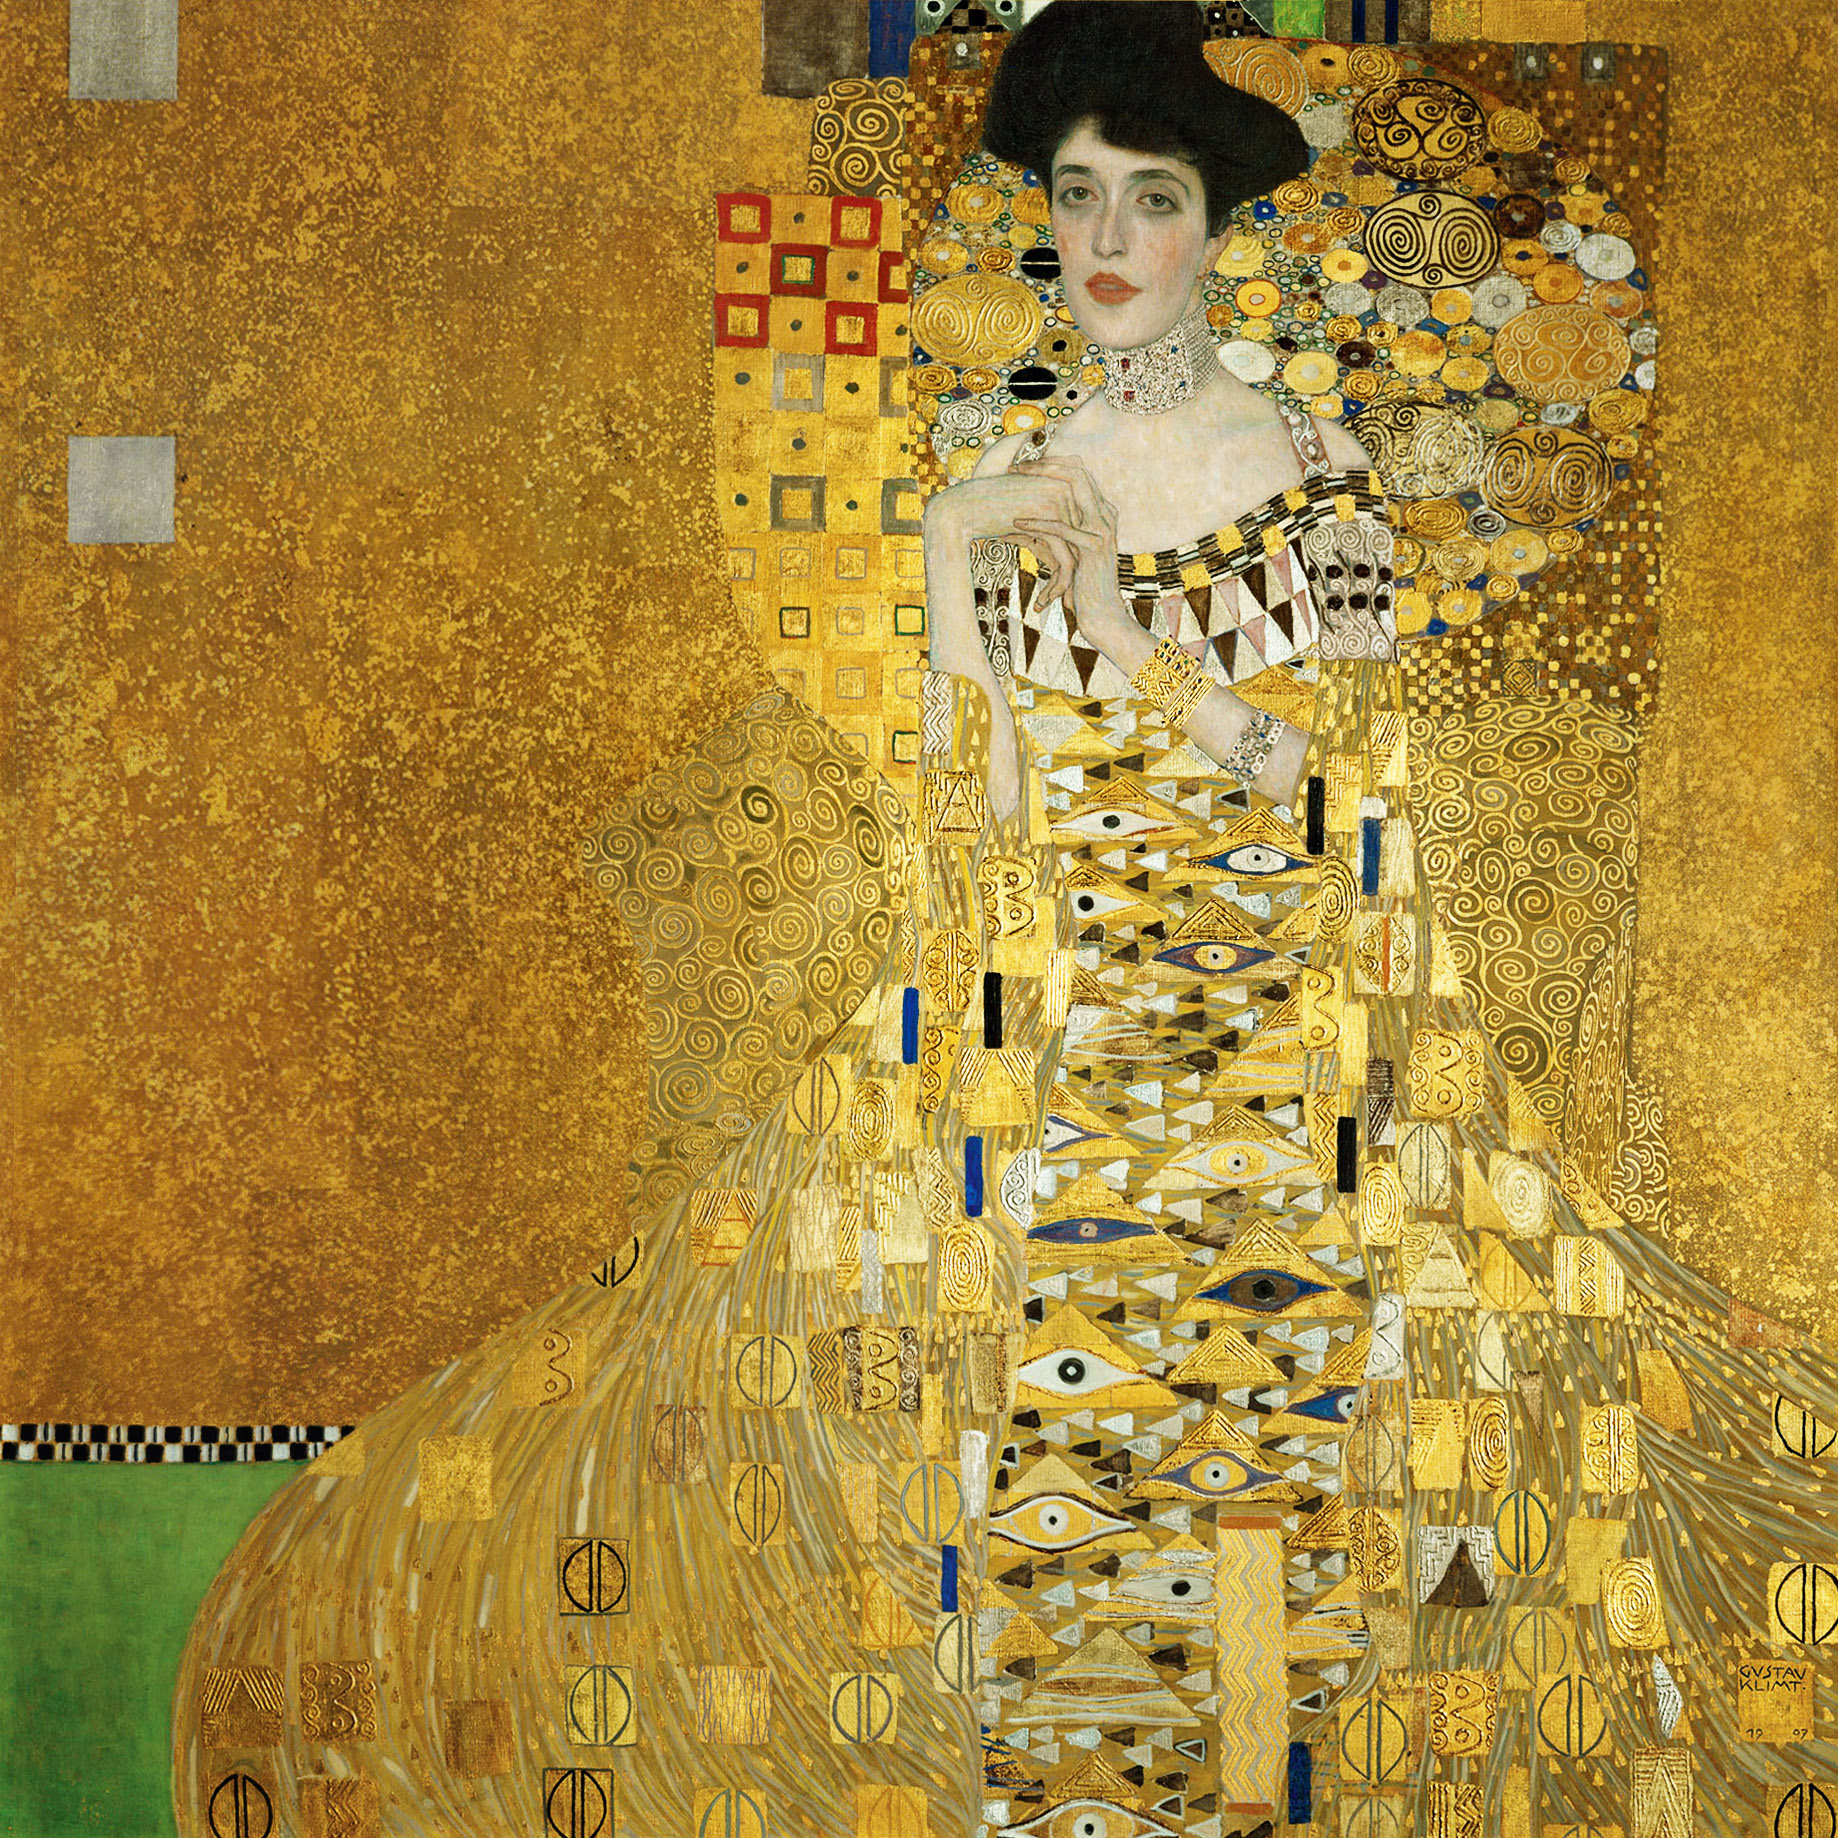 Portrait of Adele Bloch-Bauer I - Gustav Klimt - WikiPaintings.org